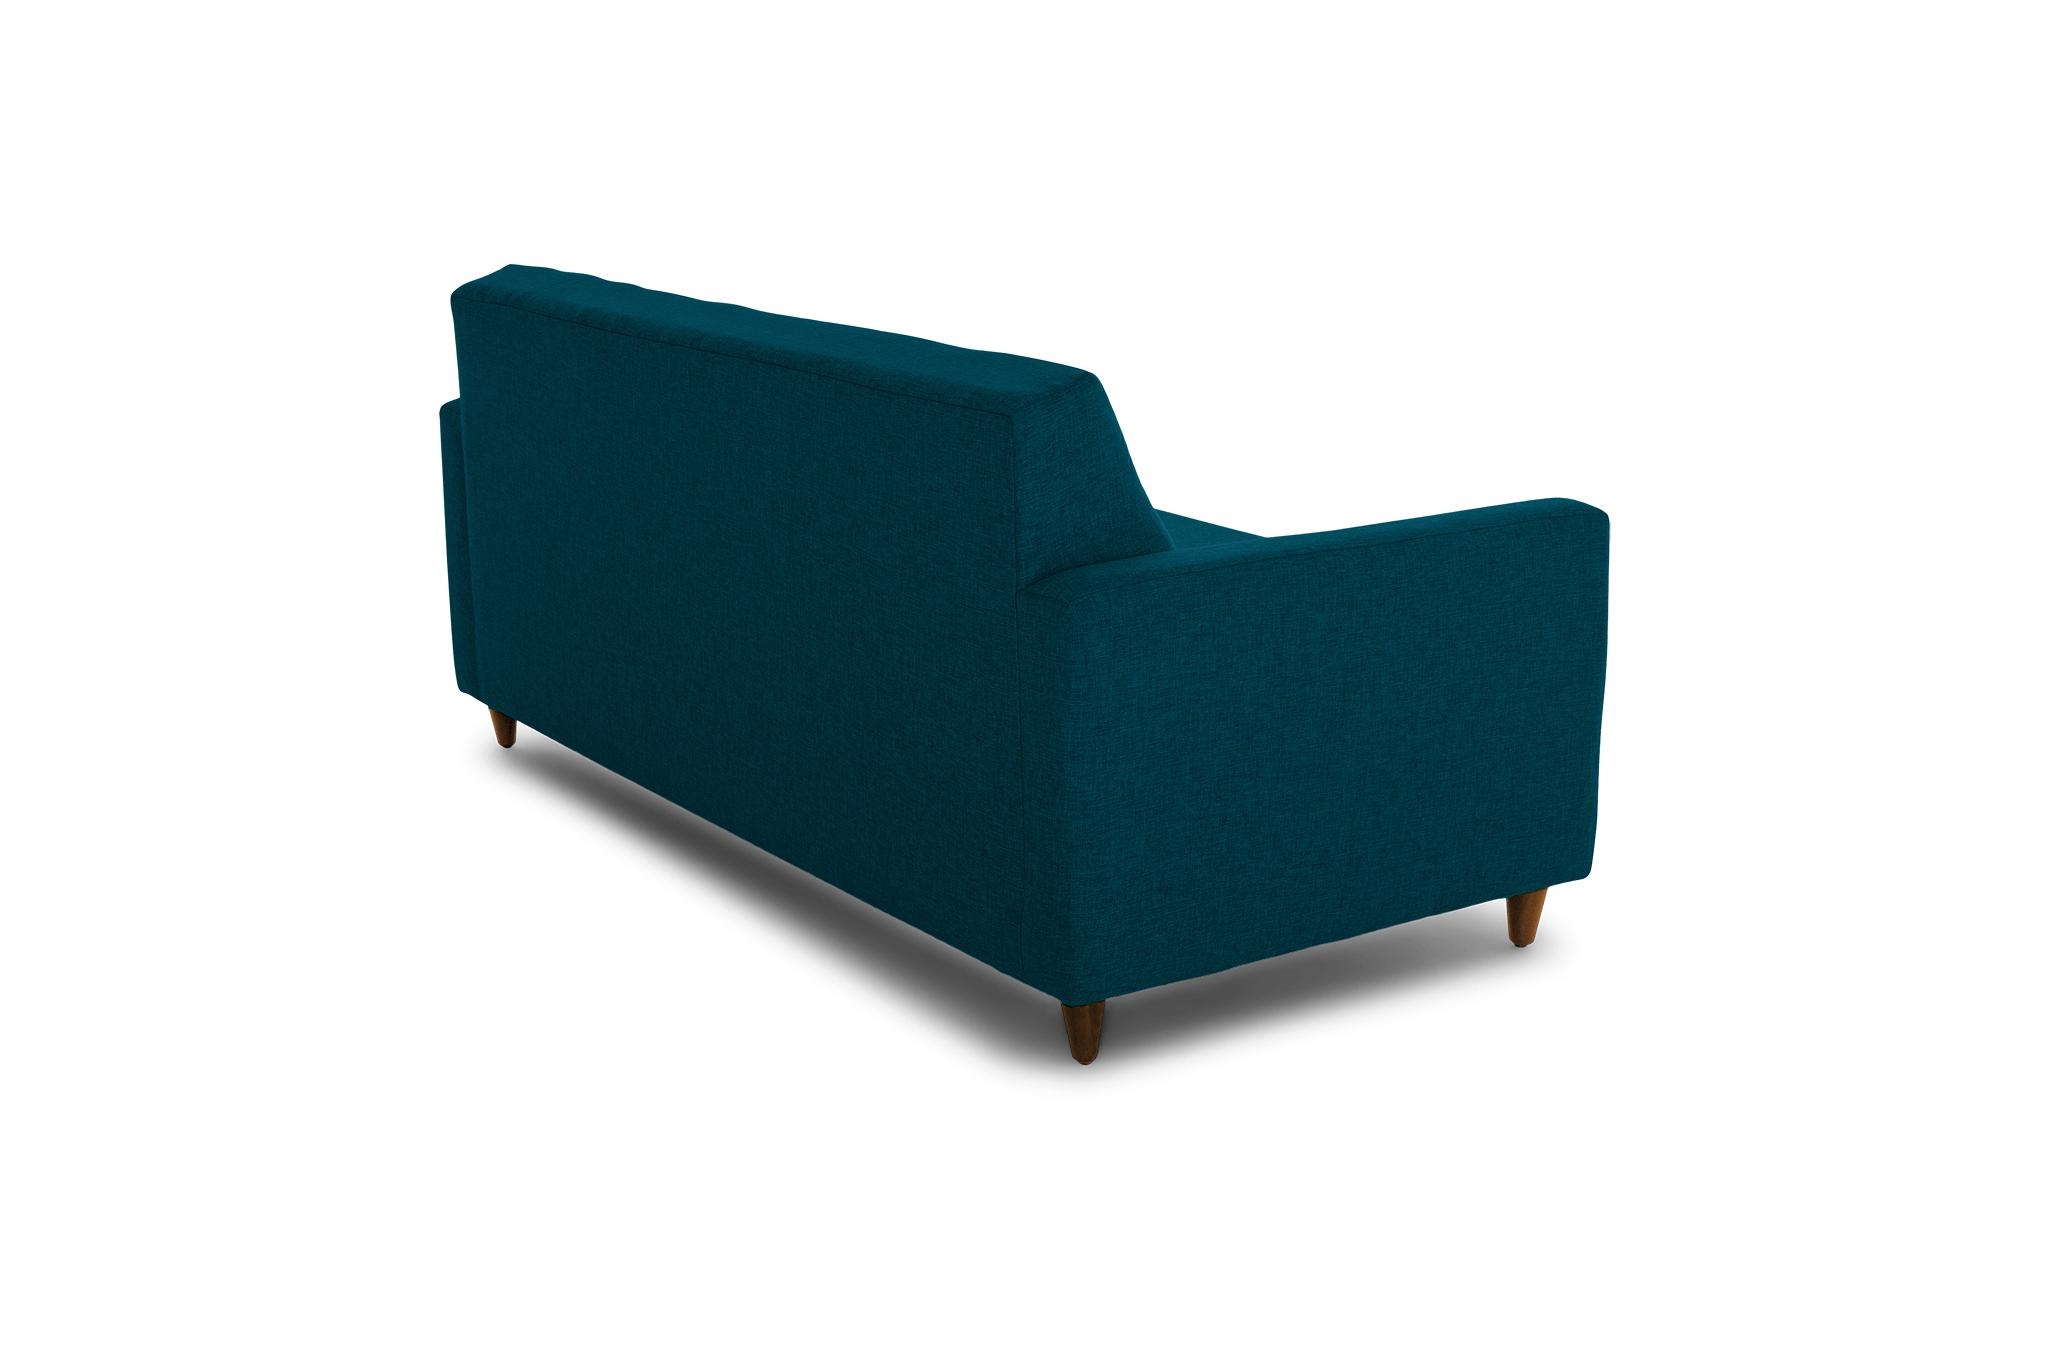 Blue Korver Mid Century Modern Sleeper Sofa - Key Largo Zenith Teal - Mocha - Image 4